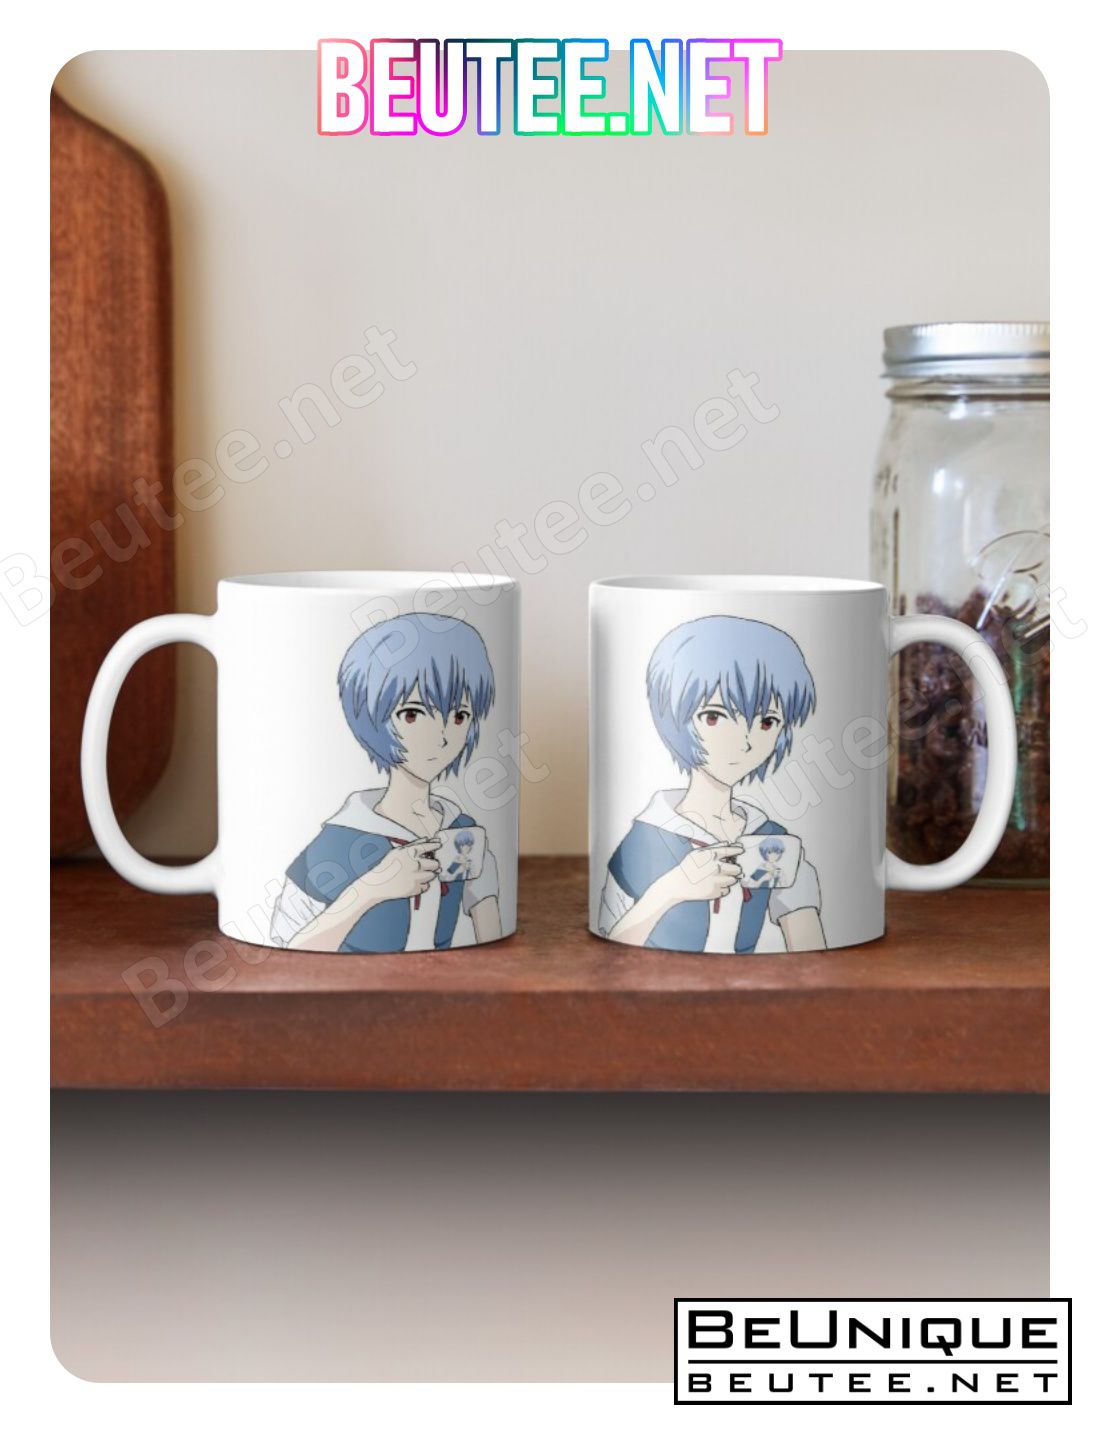 Rei Mug Coffee Mug